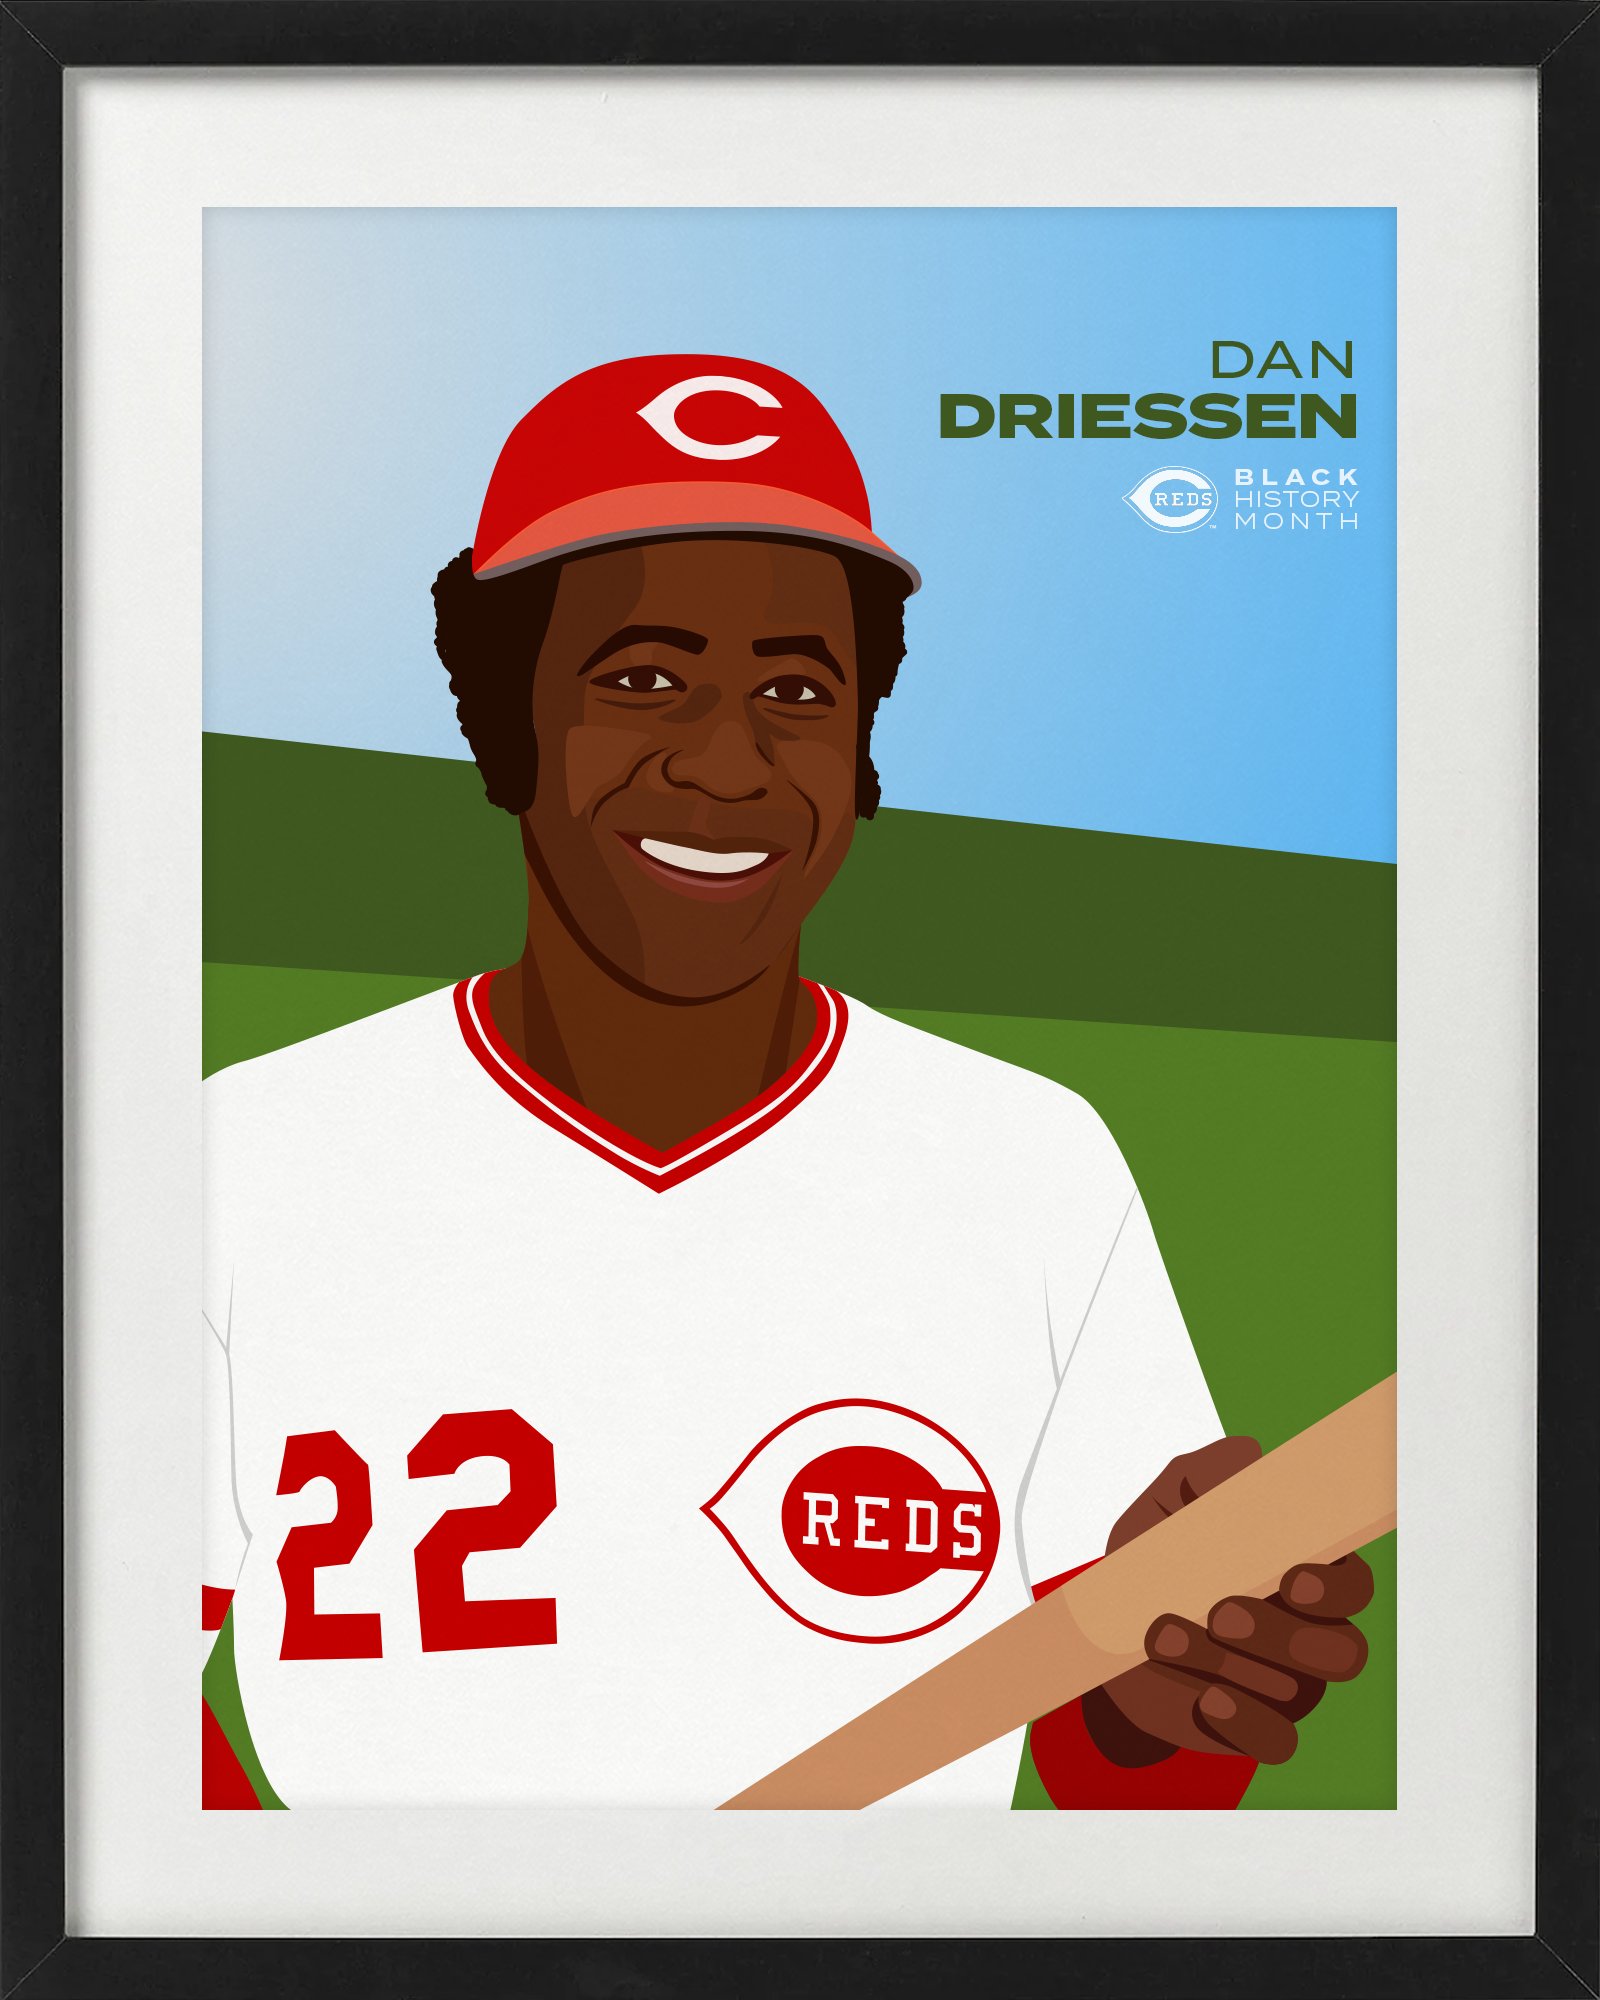 Dan Driessen Baseball Cards